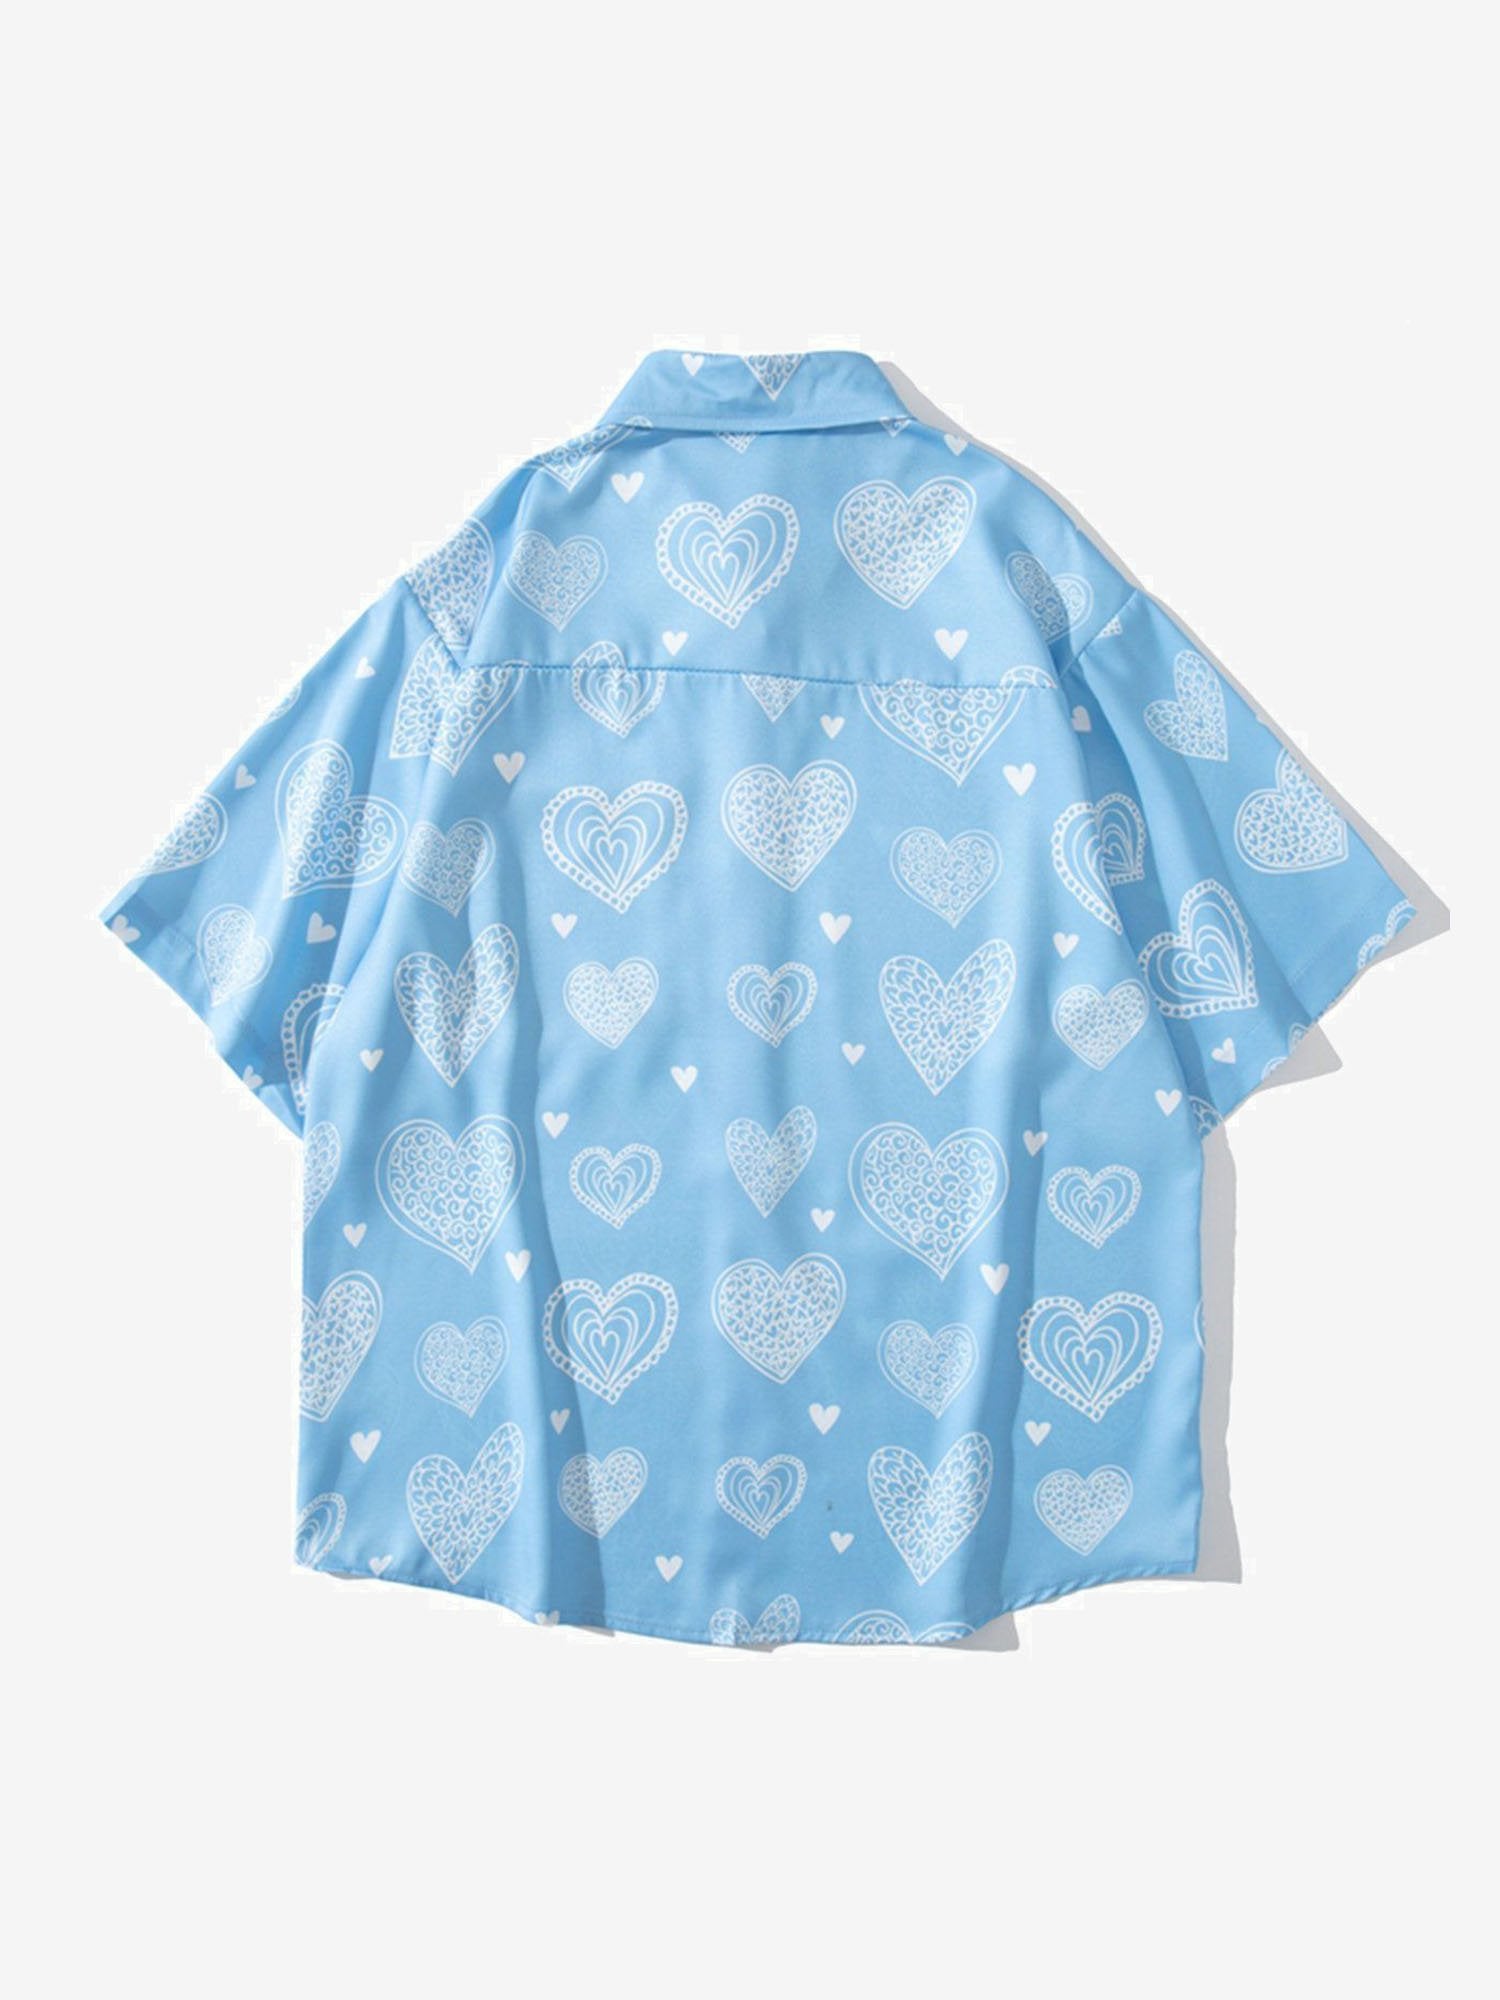 JUSTNOTAG Heart-Shaped Holiday Style Short Sleeve Shirt